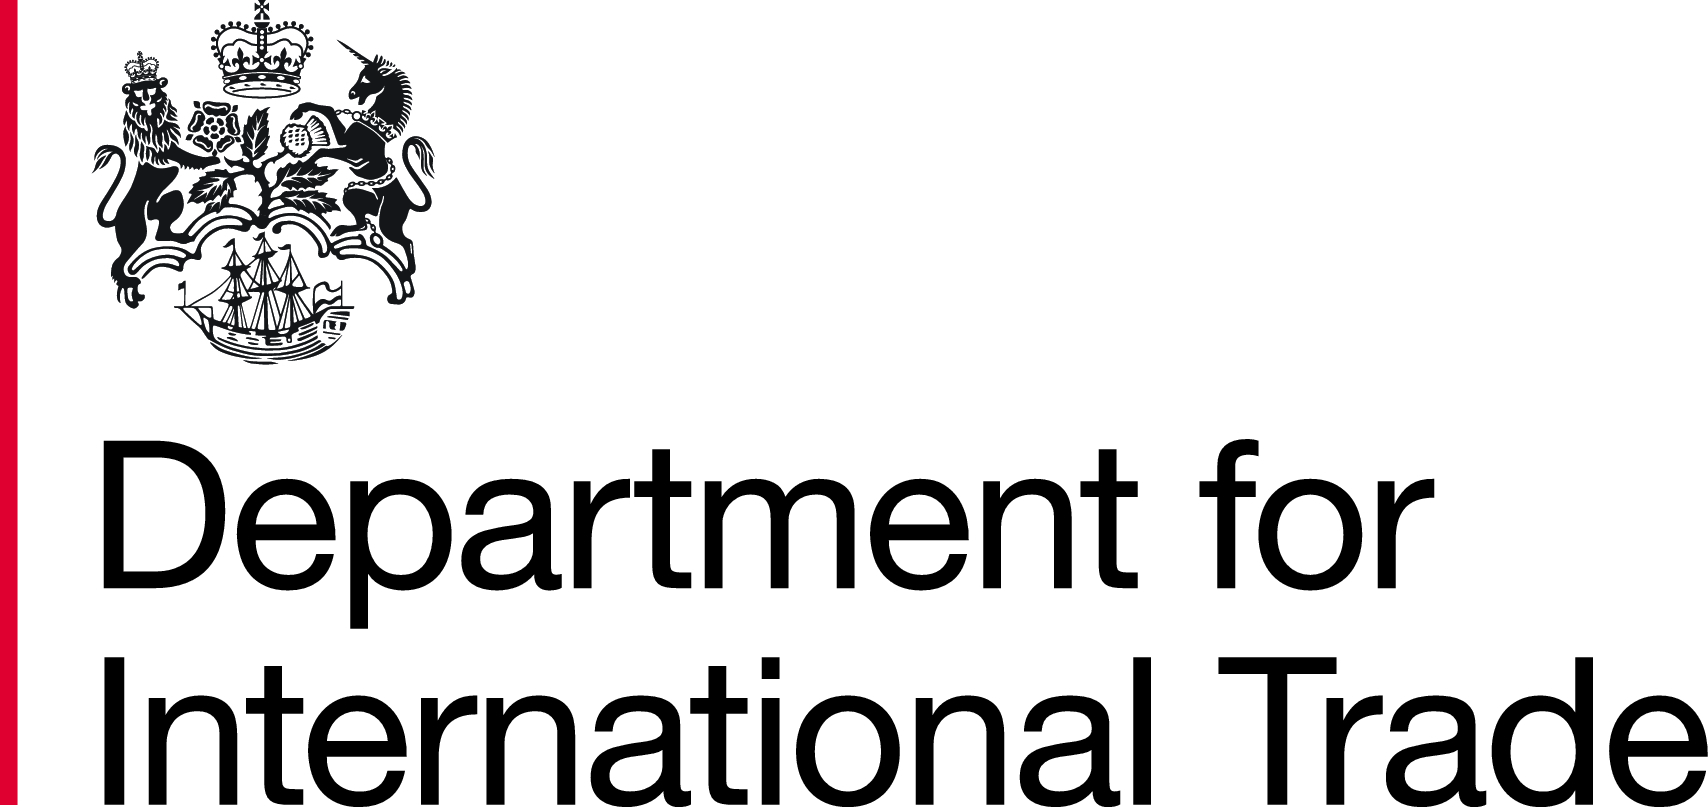 Department-for-International-Trade-DIT-logo (1)